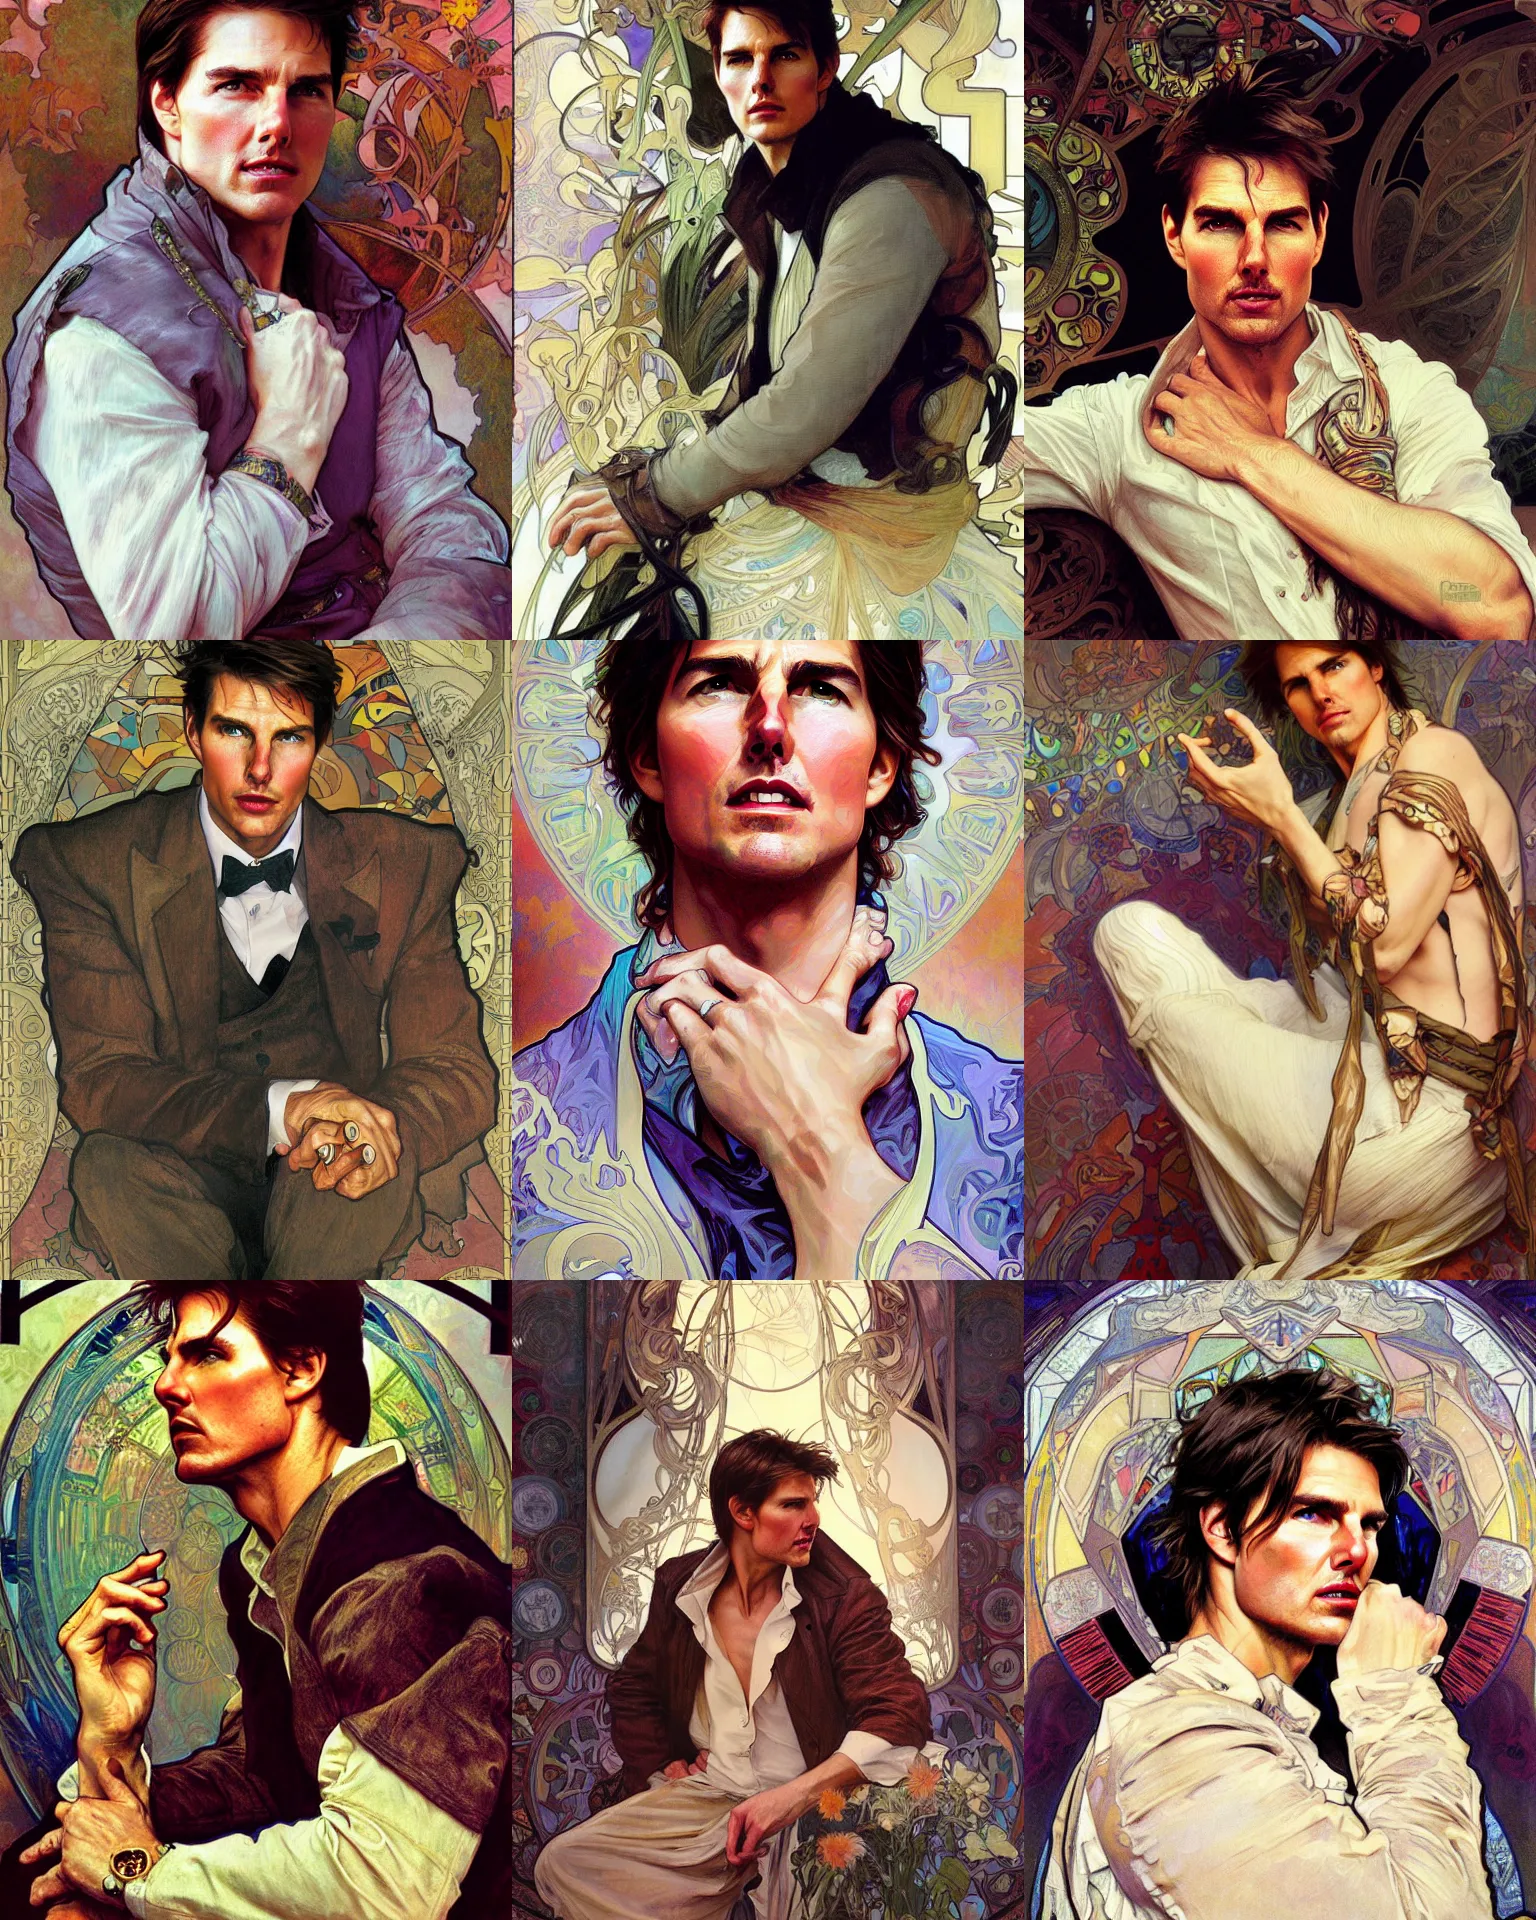 Prompt: A portrait of Tom Cruise by loish, Alphonse Mucha, Thomas Moran, Mandy Jurgens, fashion photography